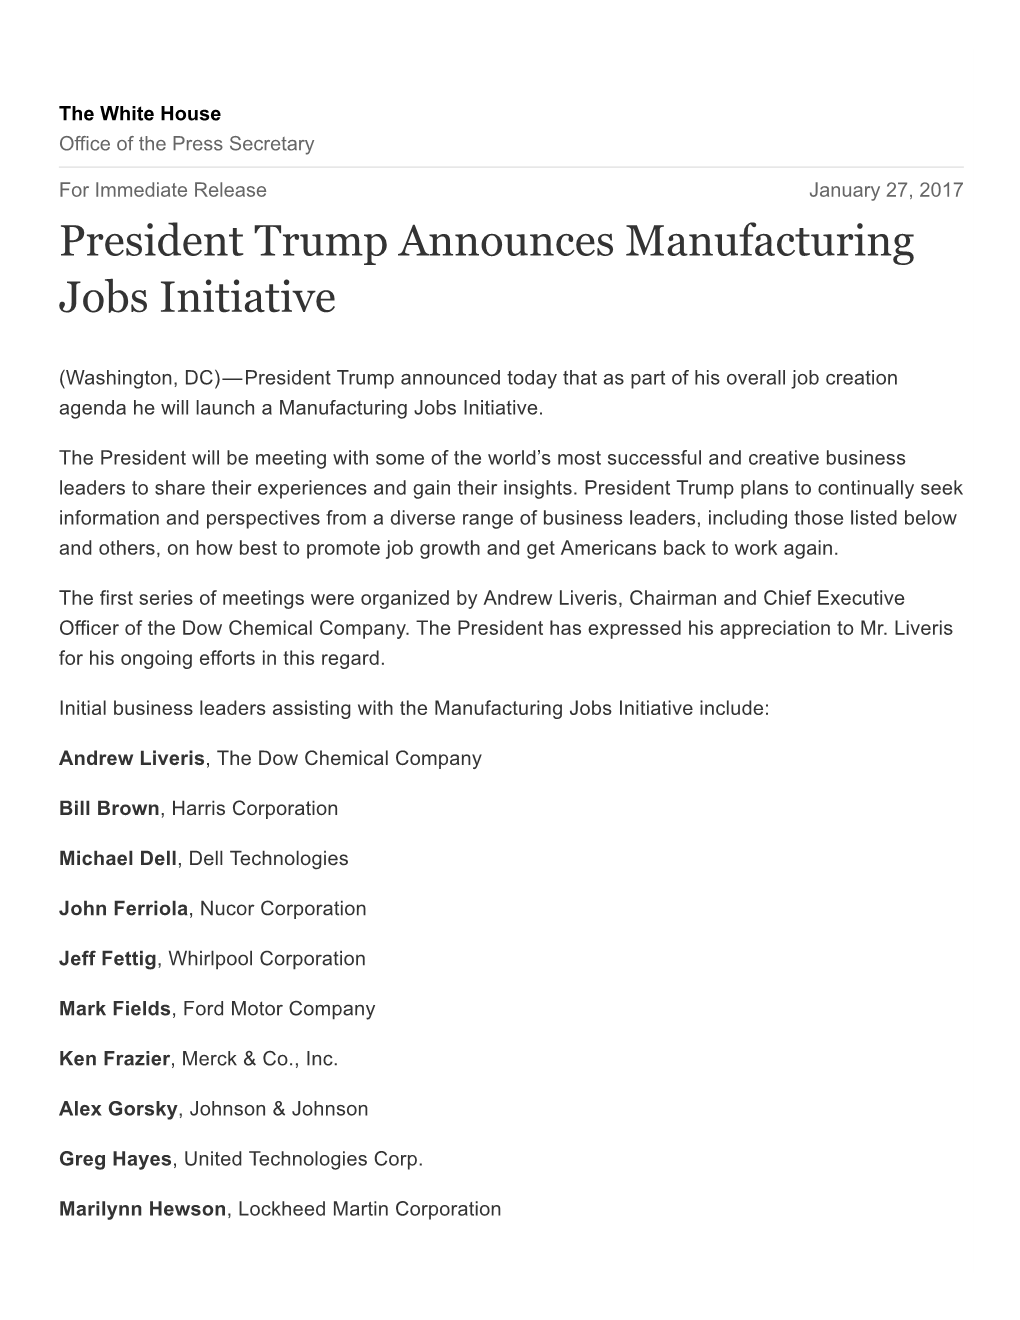 President Trump Announces Manufacturing Jobs Initiative